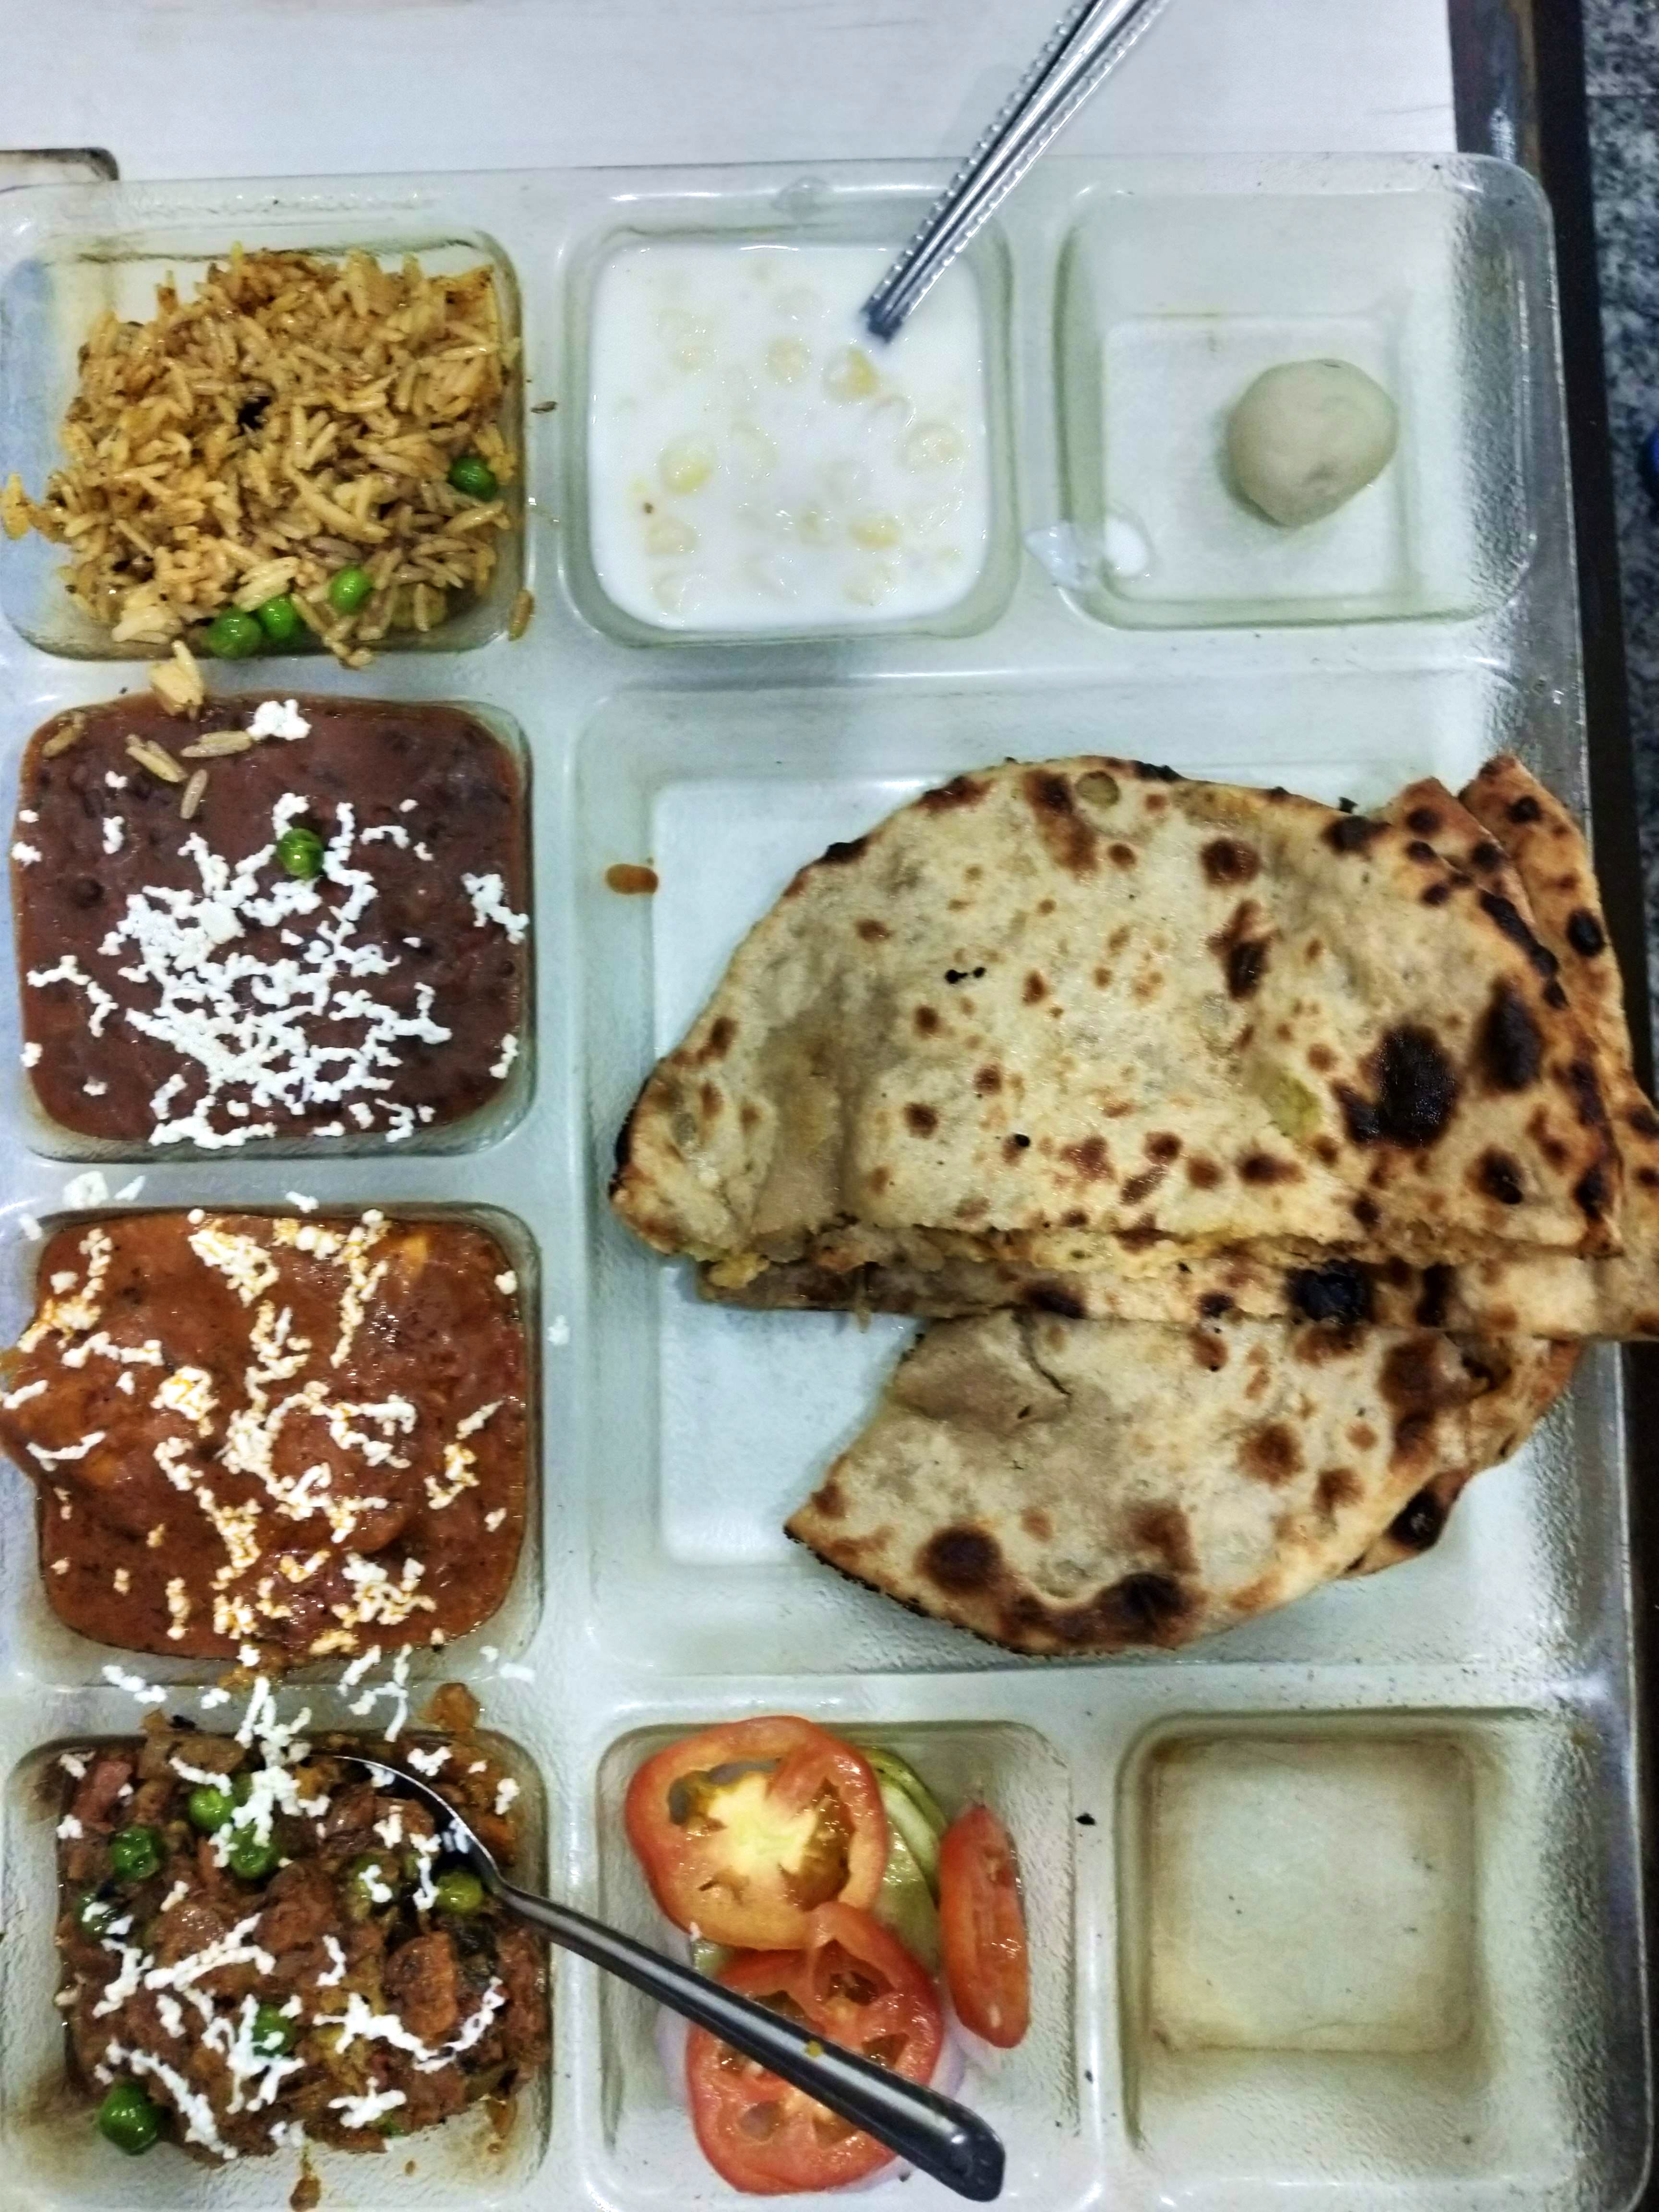 Food,Cuisine,Naan,Dish,Ingredient,Roti,Chapati,Flatbread,Produce,Indian cuisine